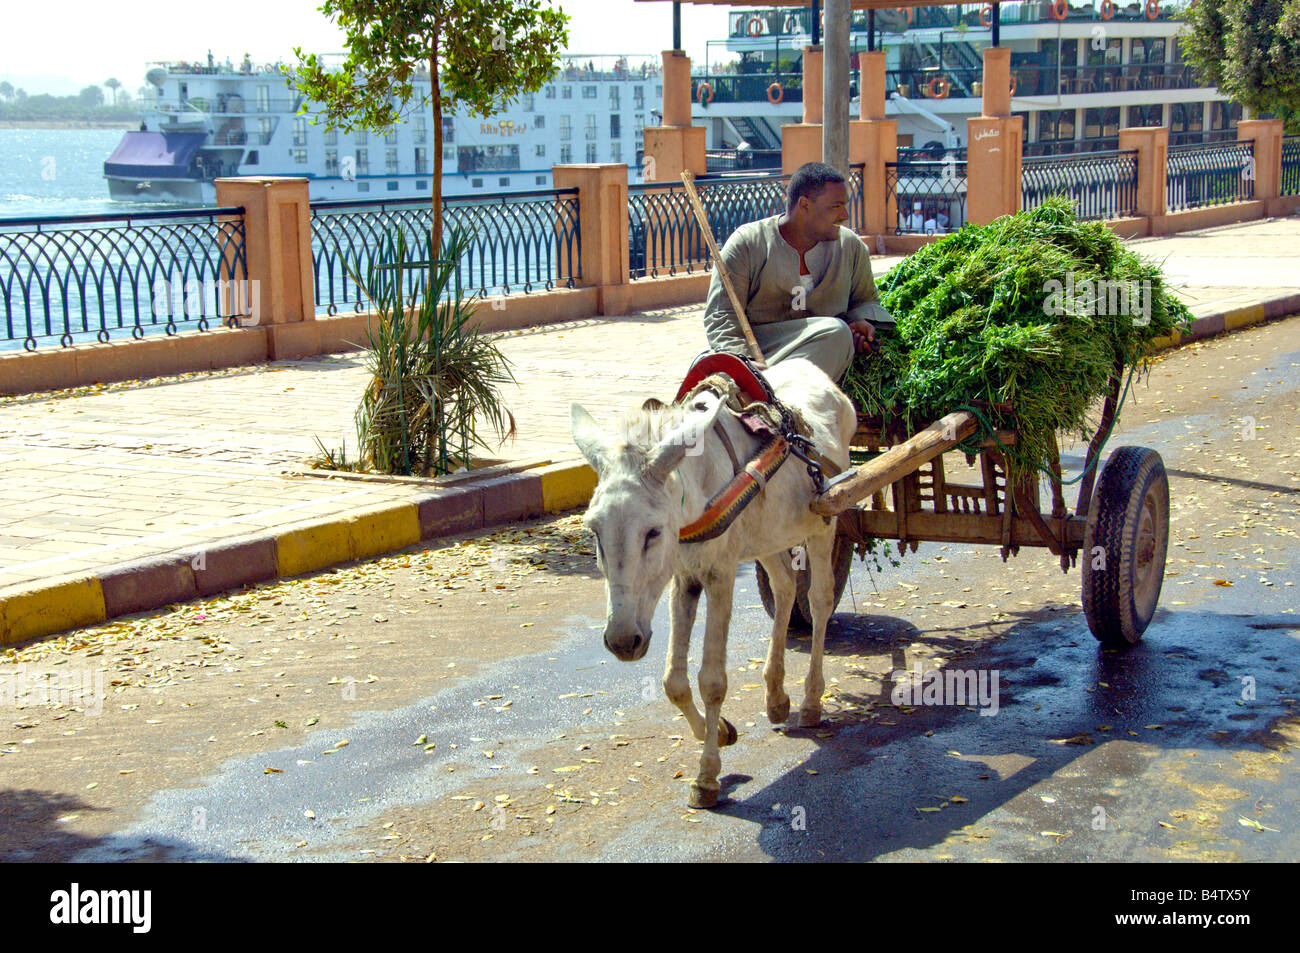 Street scenes  with donkey carts and alfalfa in Edfu Egypt Stock Photo